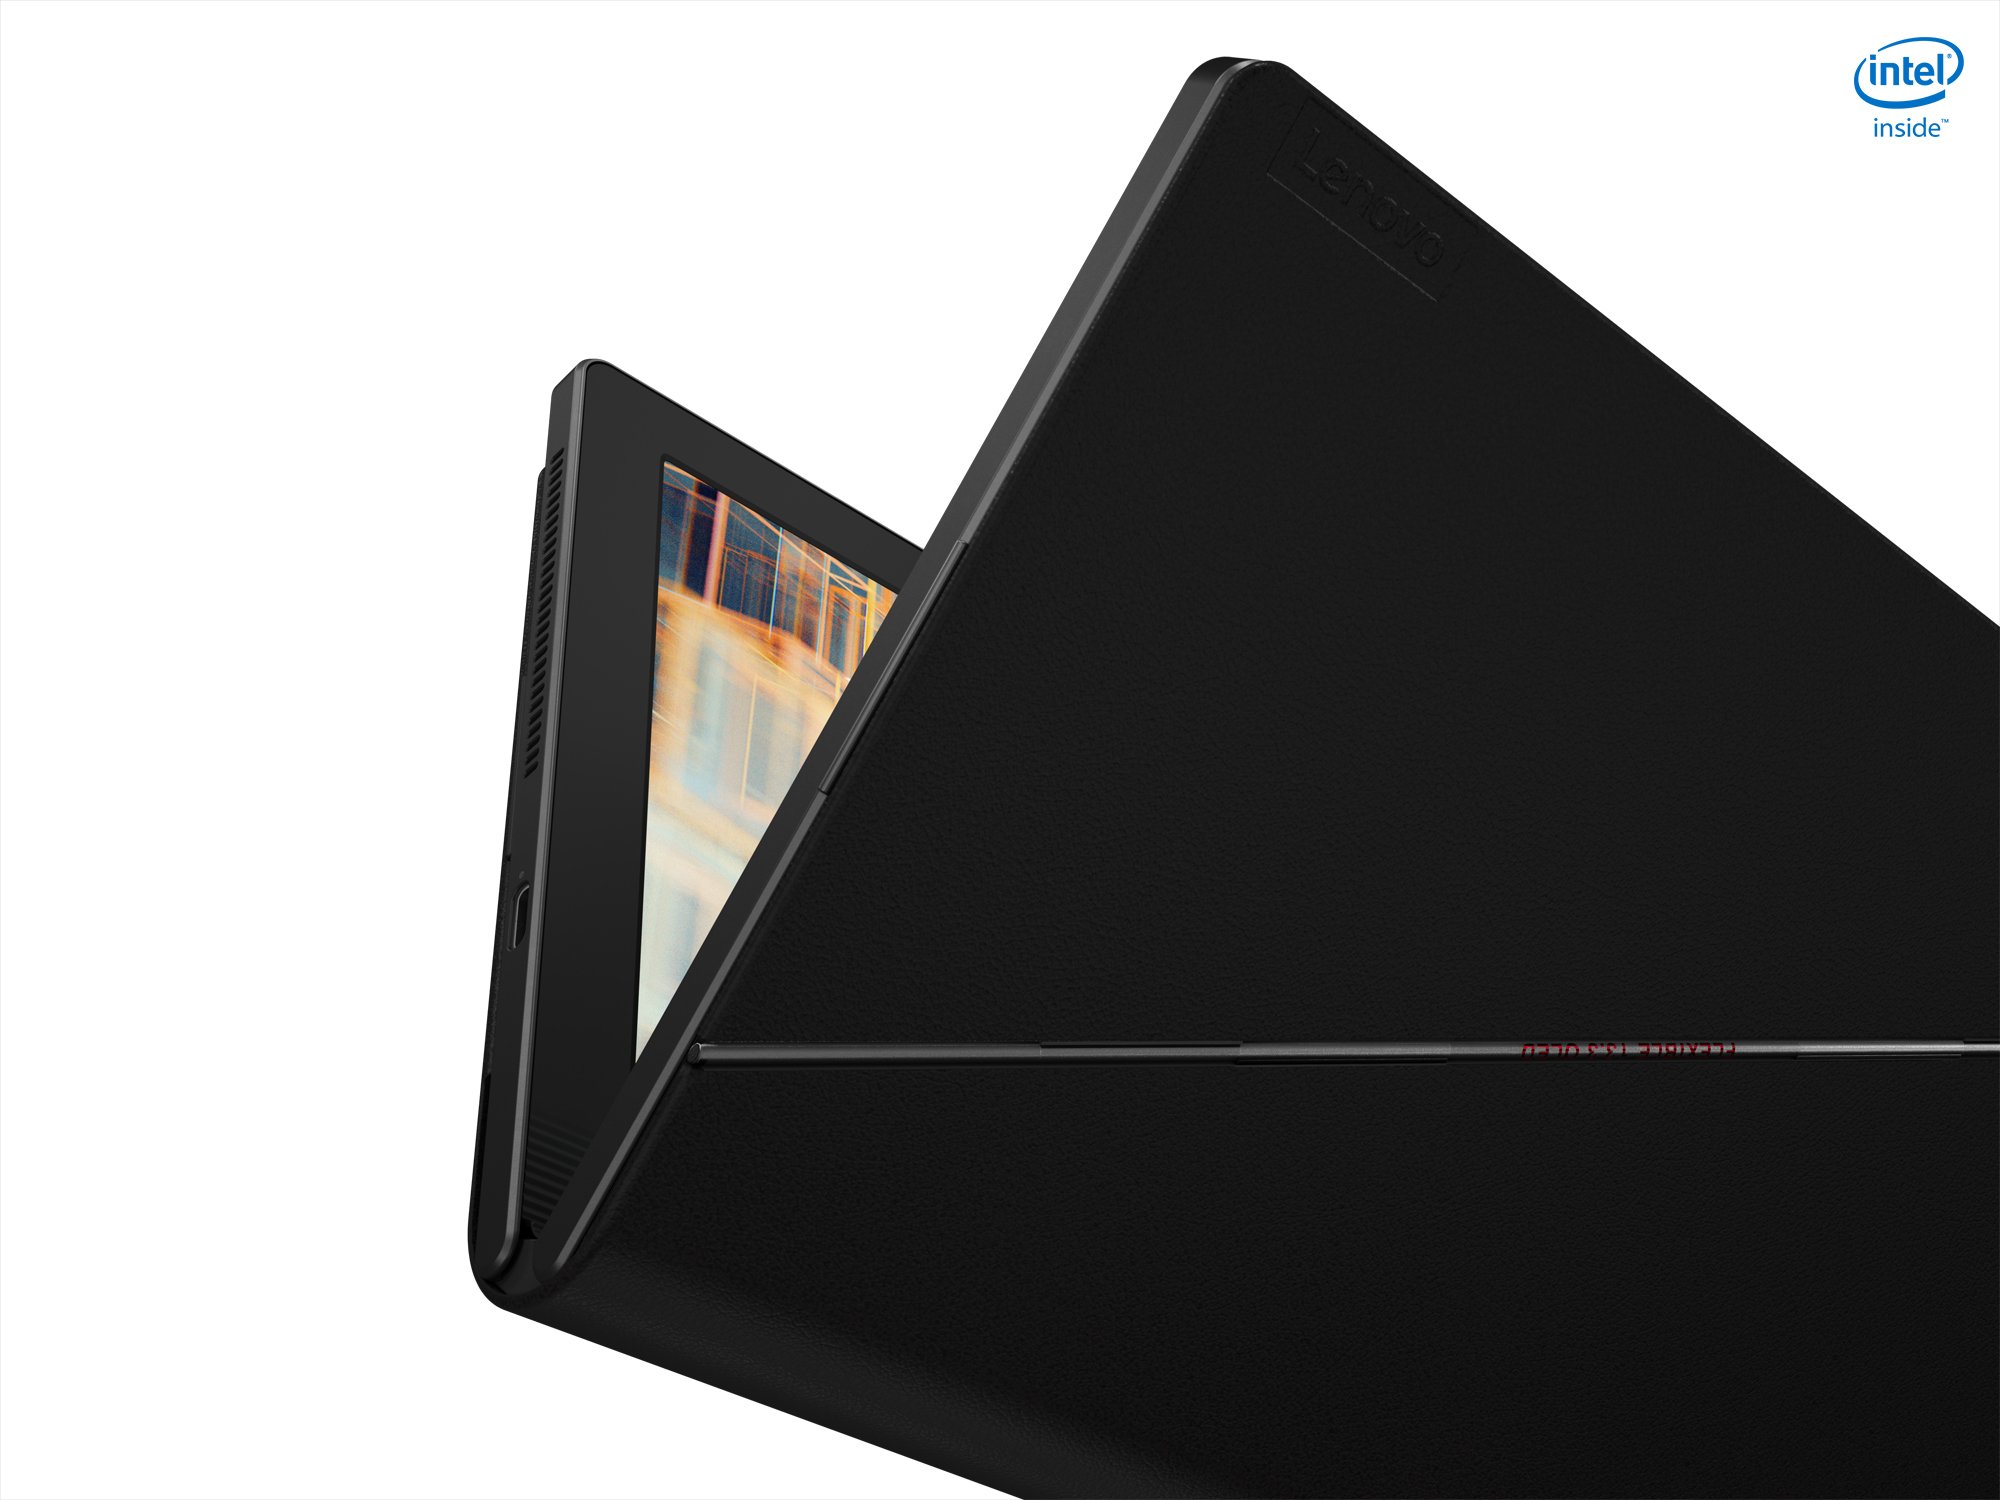 ThinkPad X1 Fold closing back of device